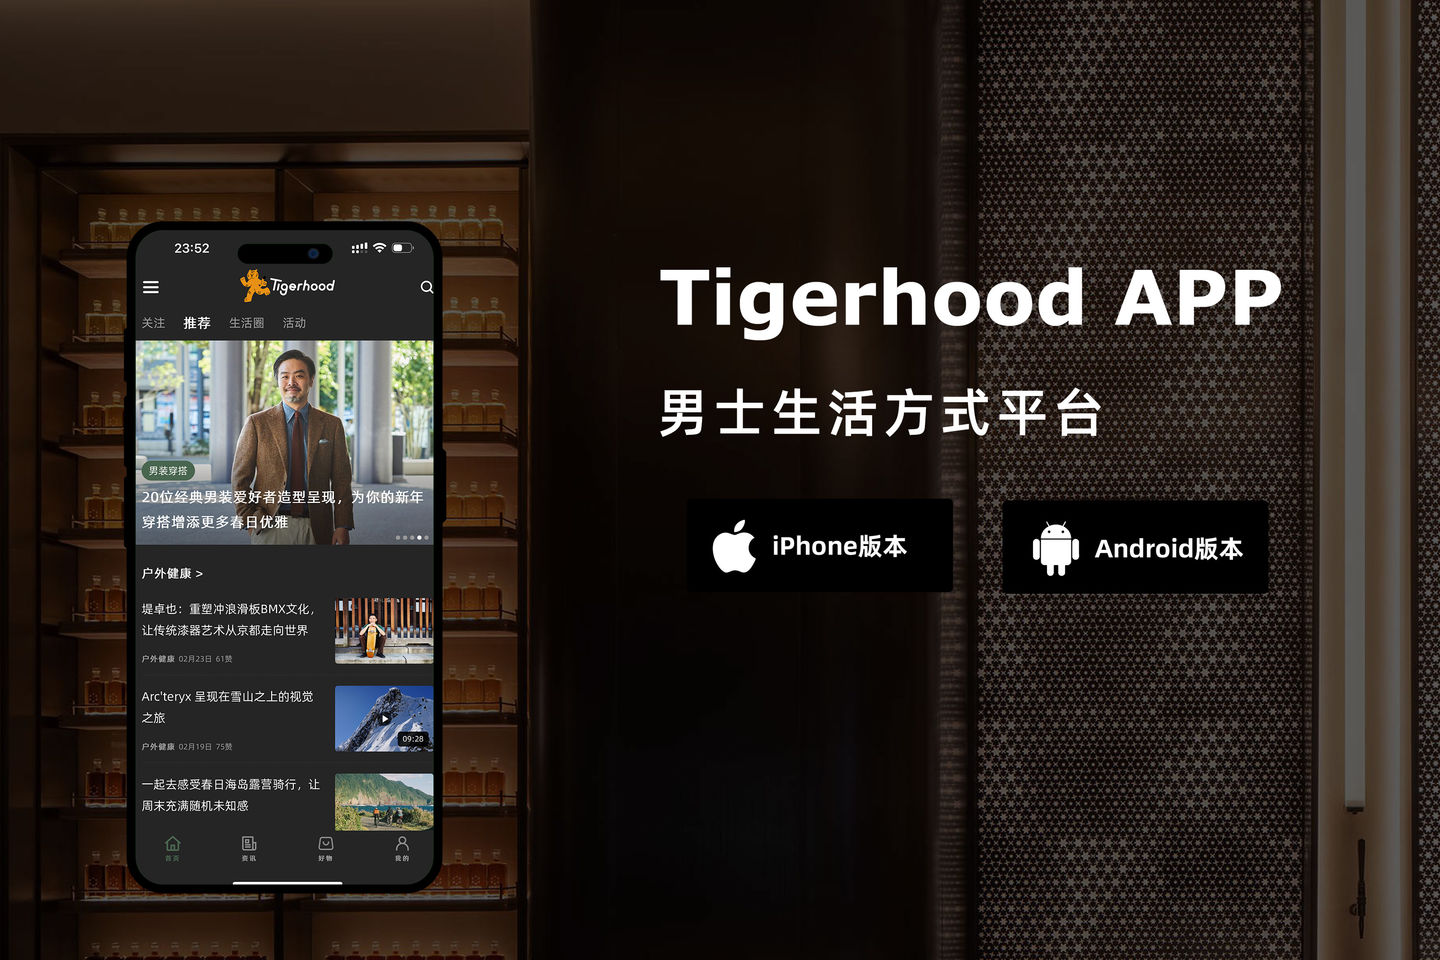 Tigerhood APP 新版本更新 用户发帖功能恢复